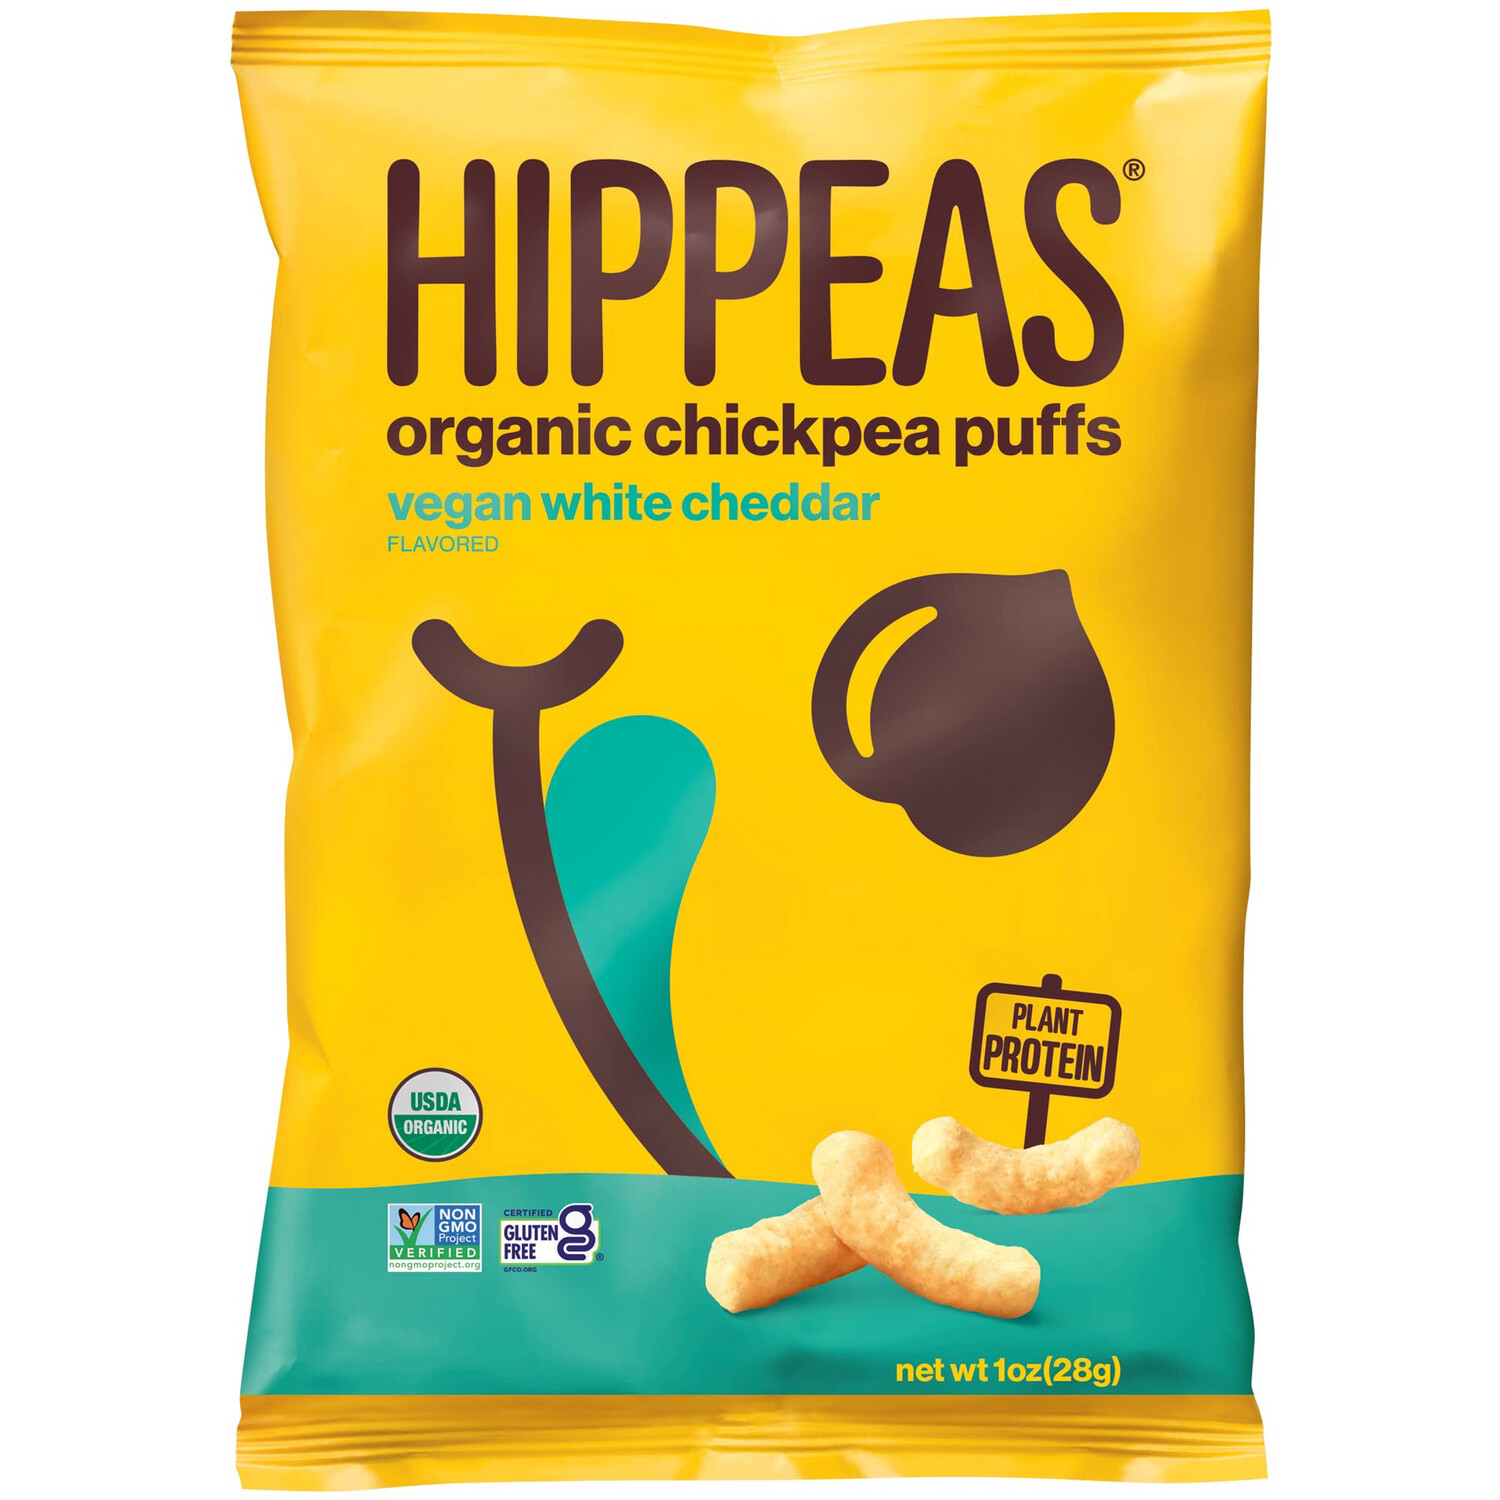 Hippeas Organic Chickpea Vegan White Cheddar Puffs